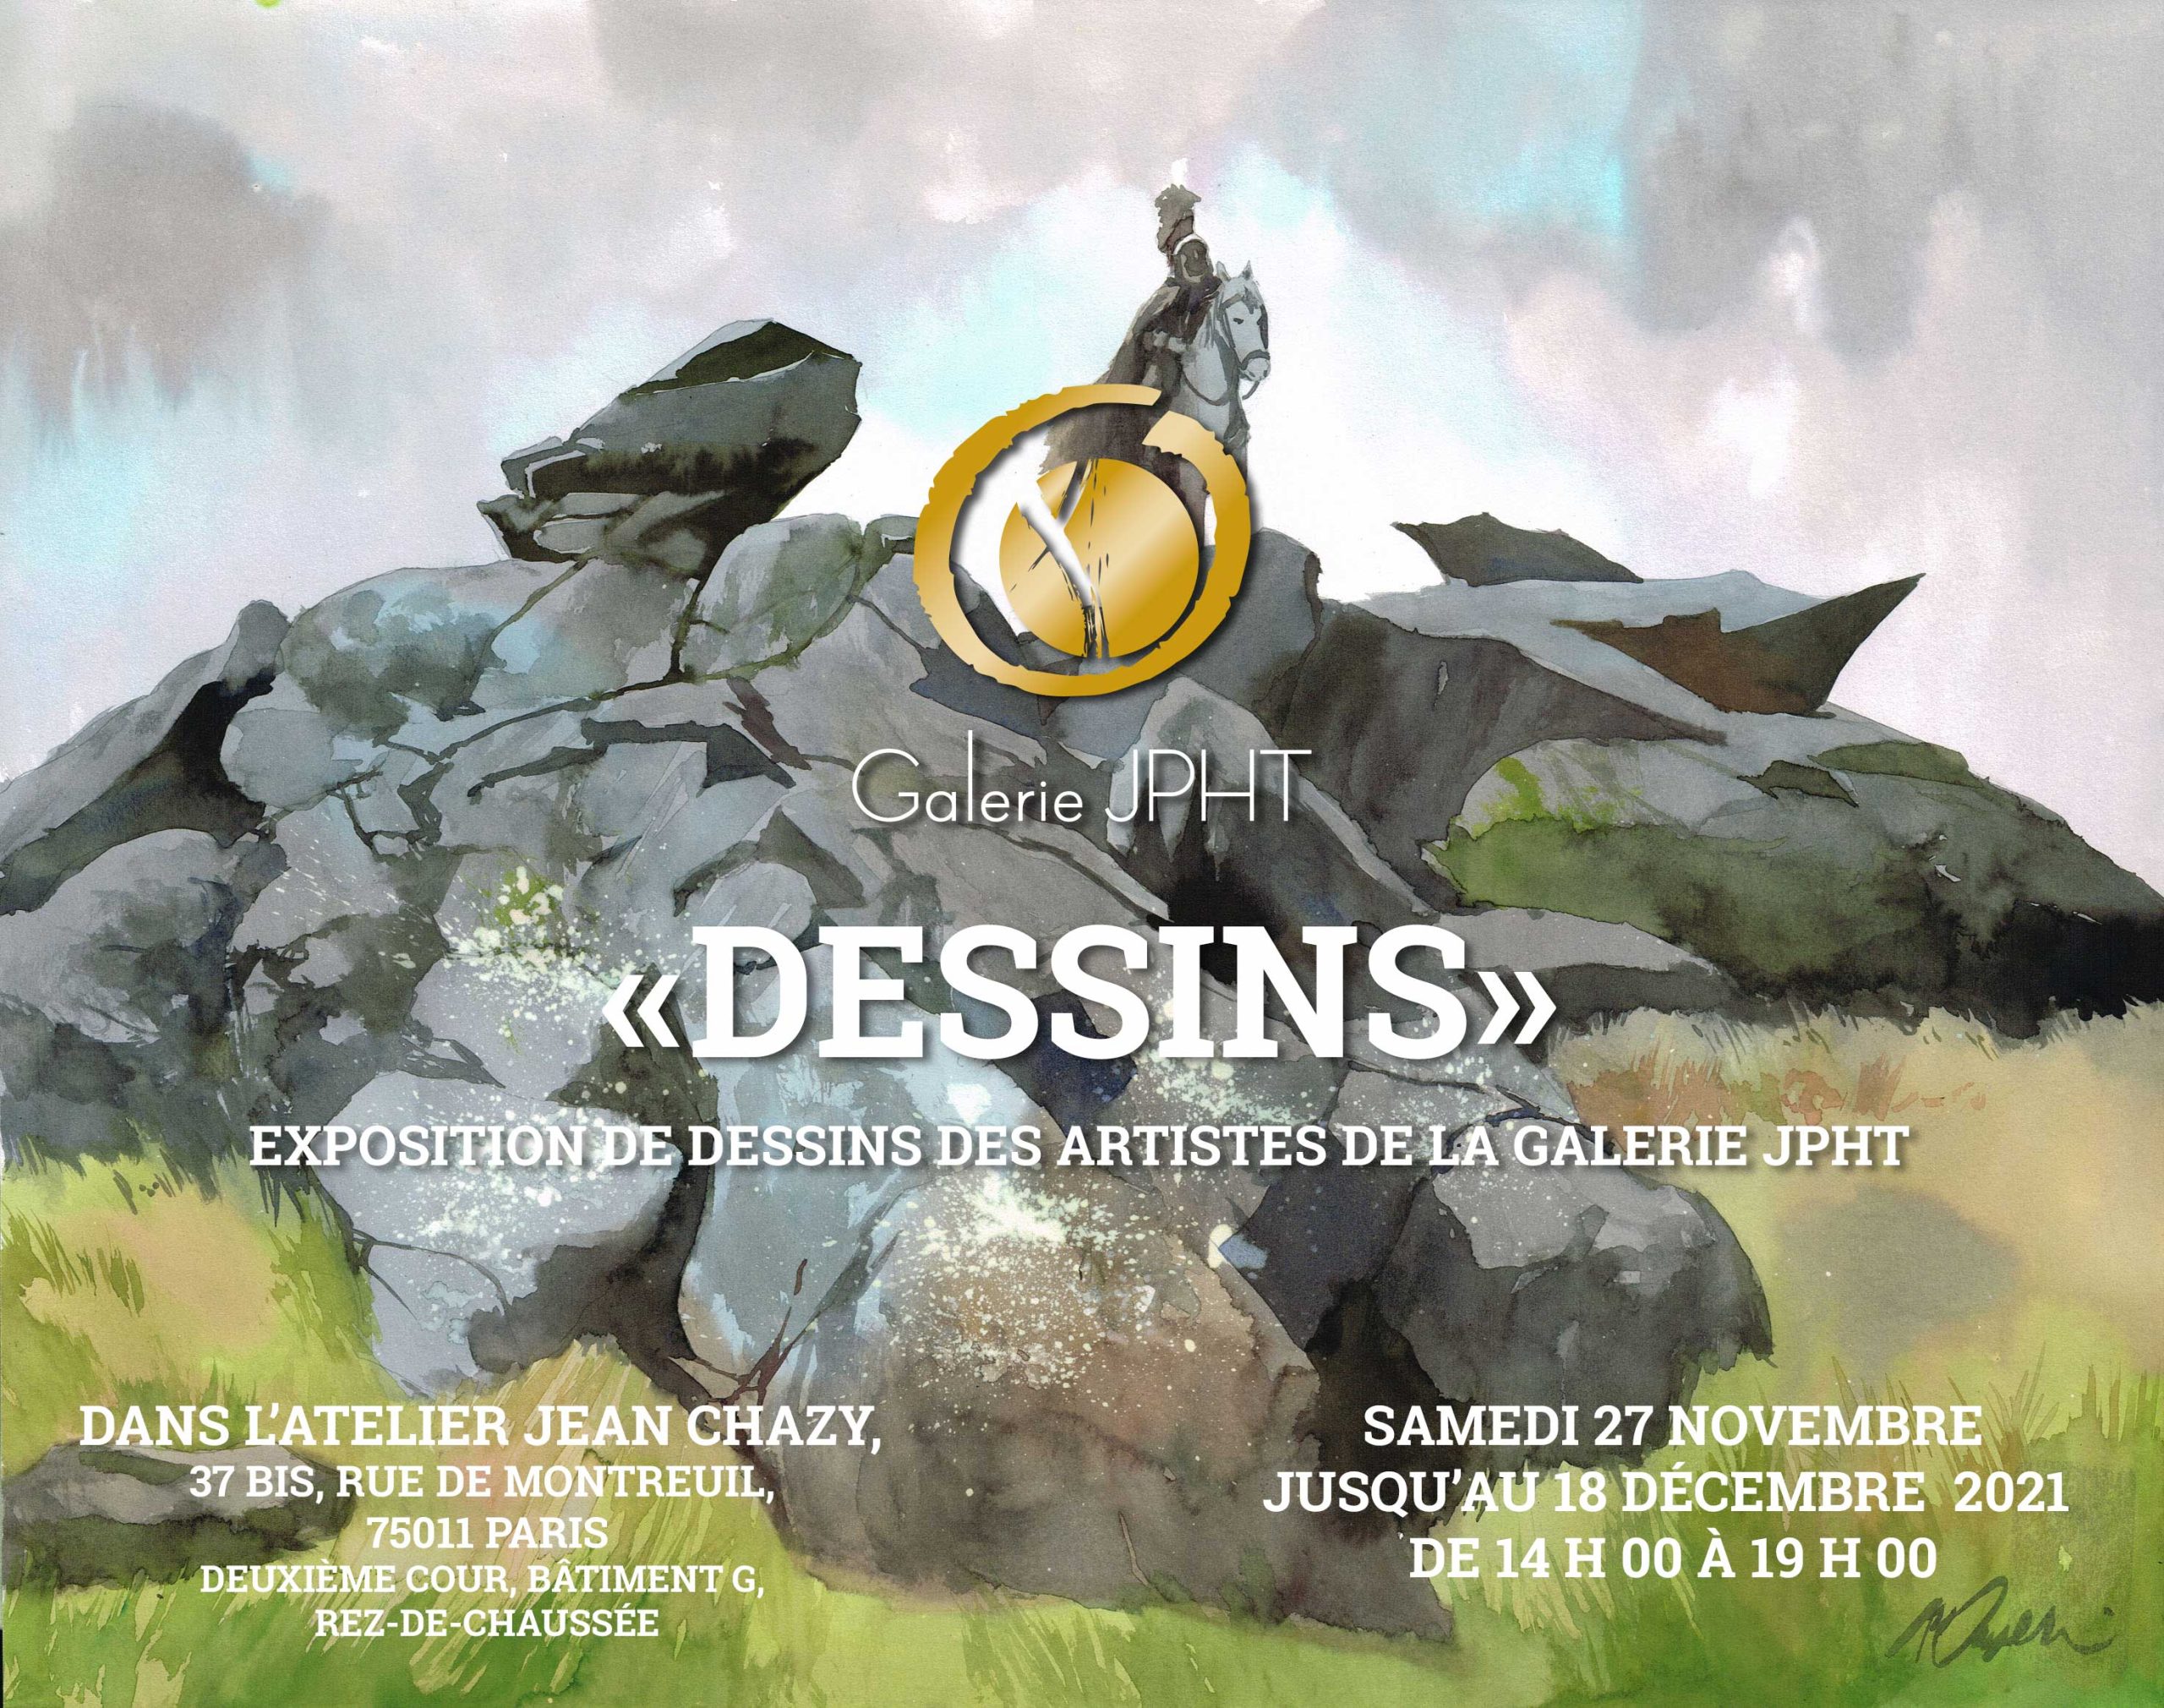 Exposition "Dessins" galerie JPHT